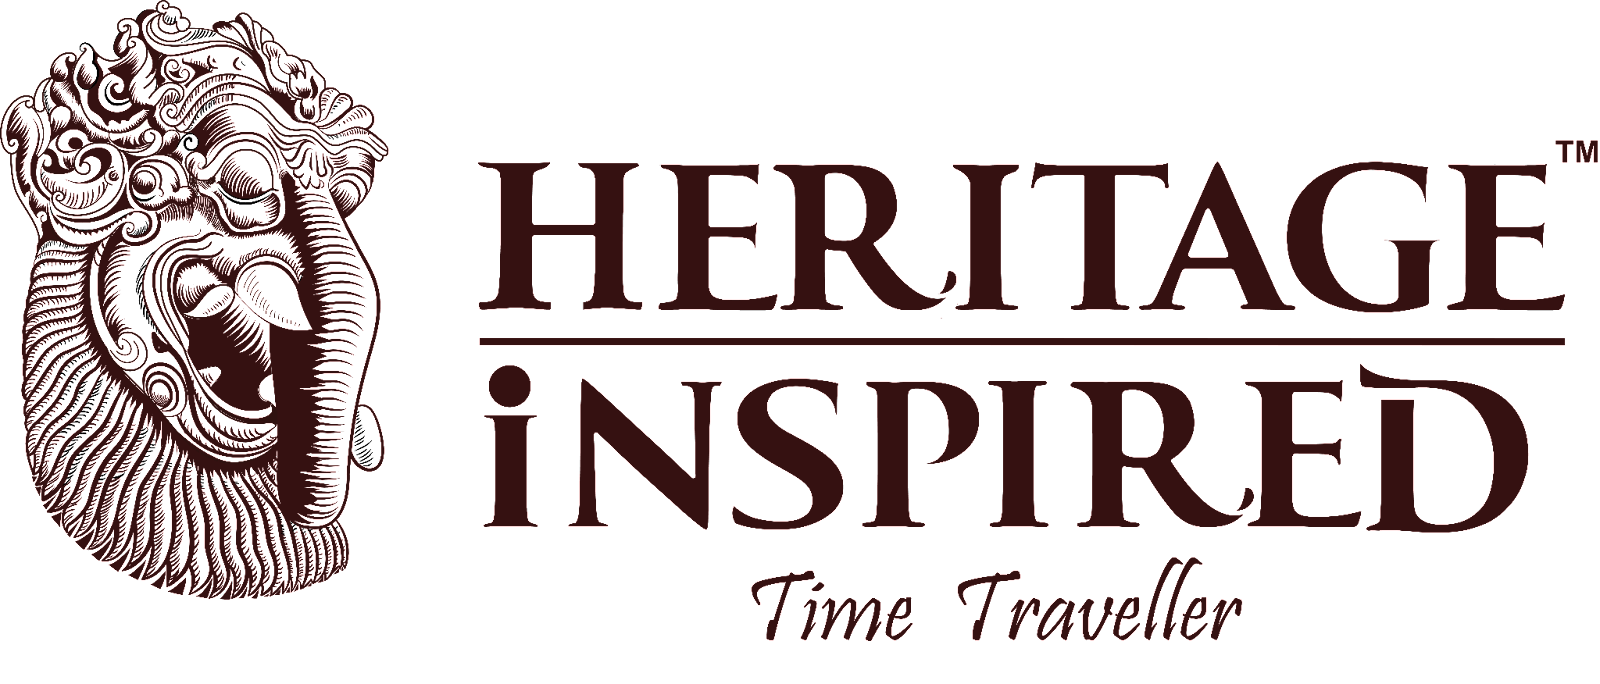 Heritage inspired logo